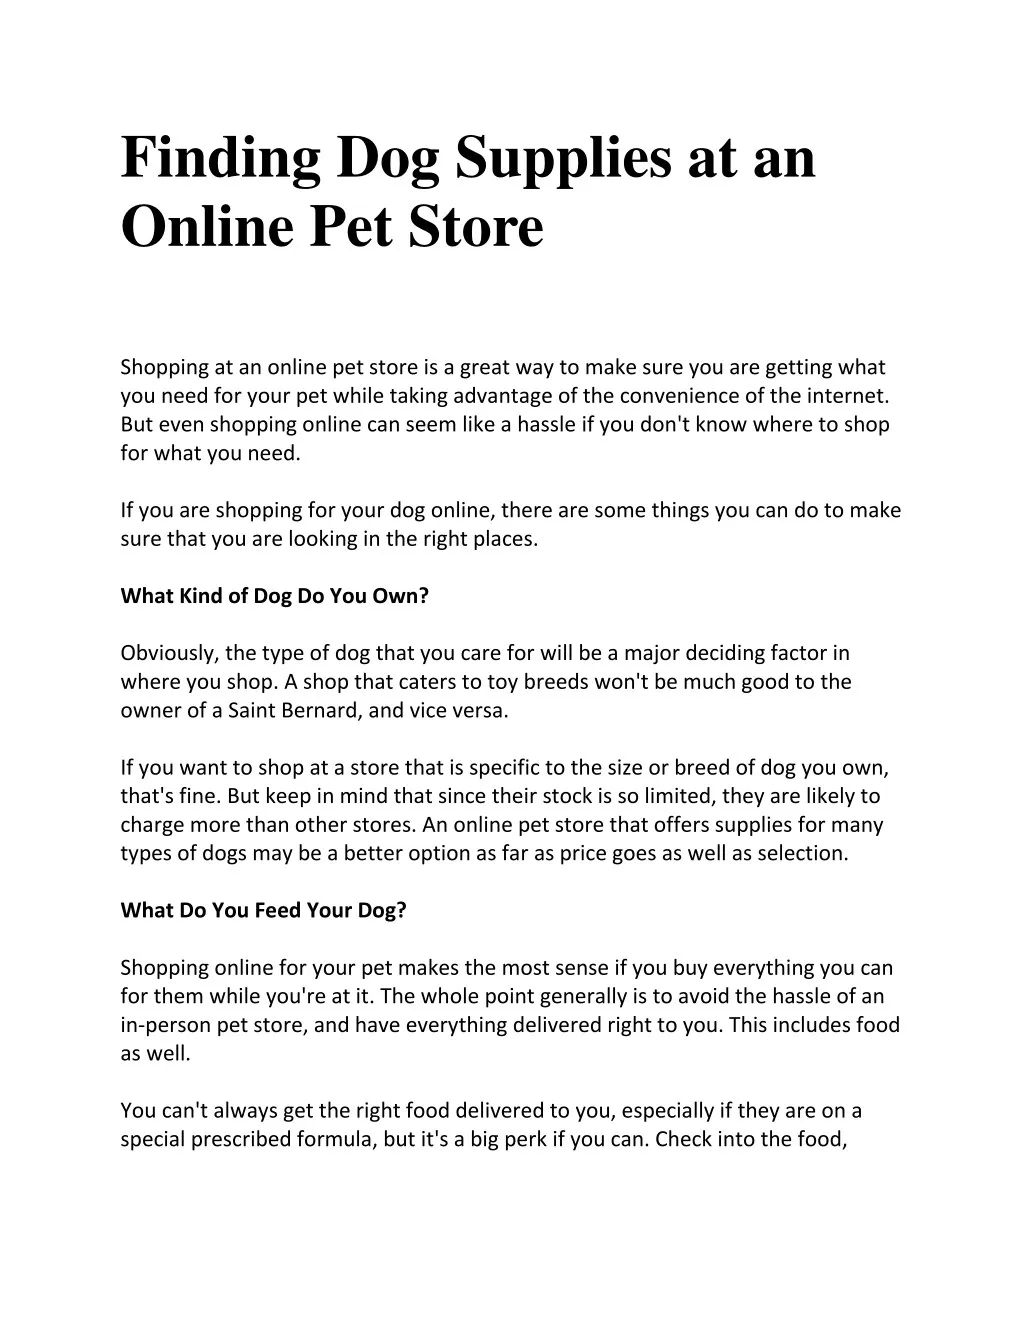 finding dog supplies at an online pet store